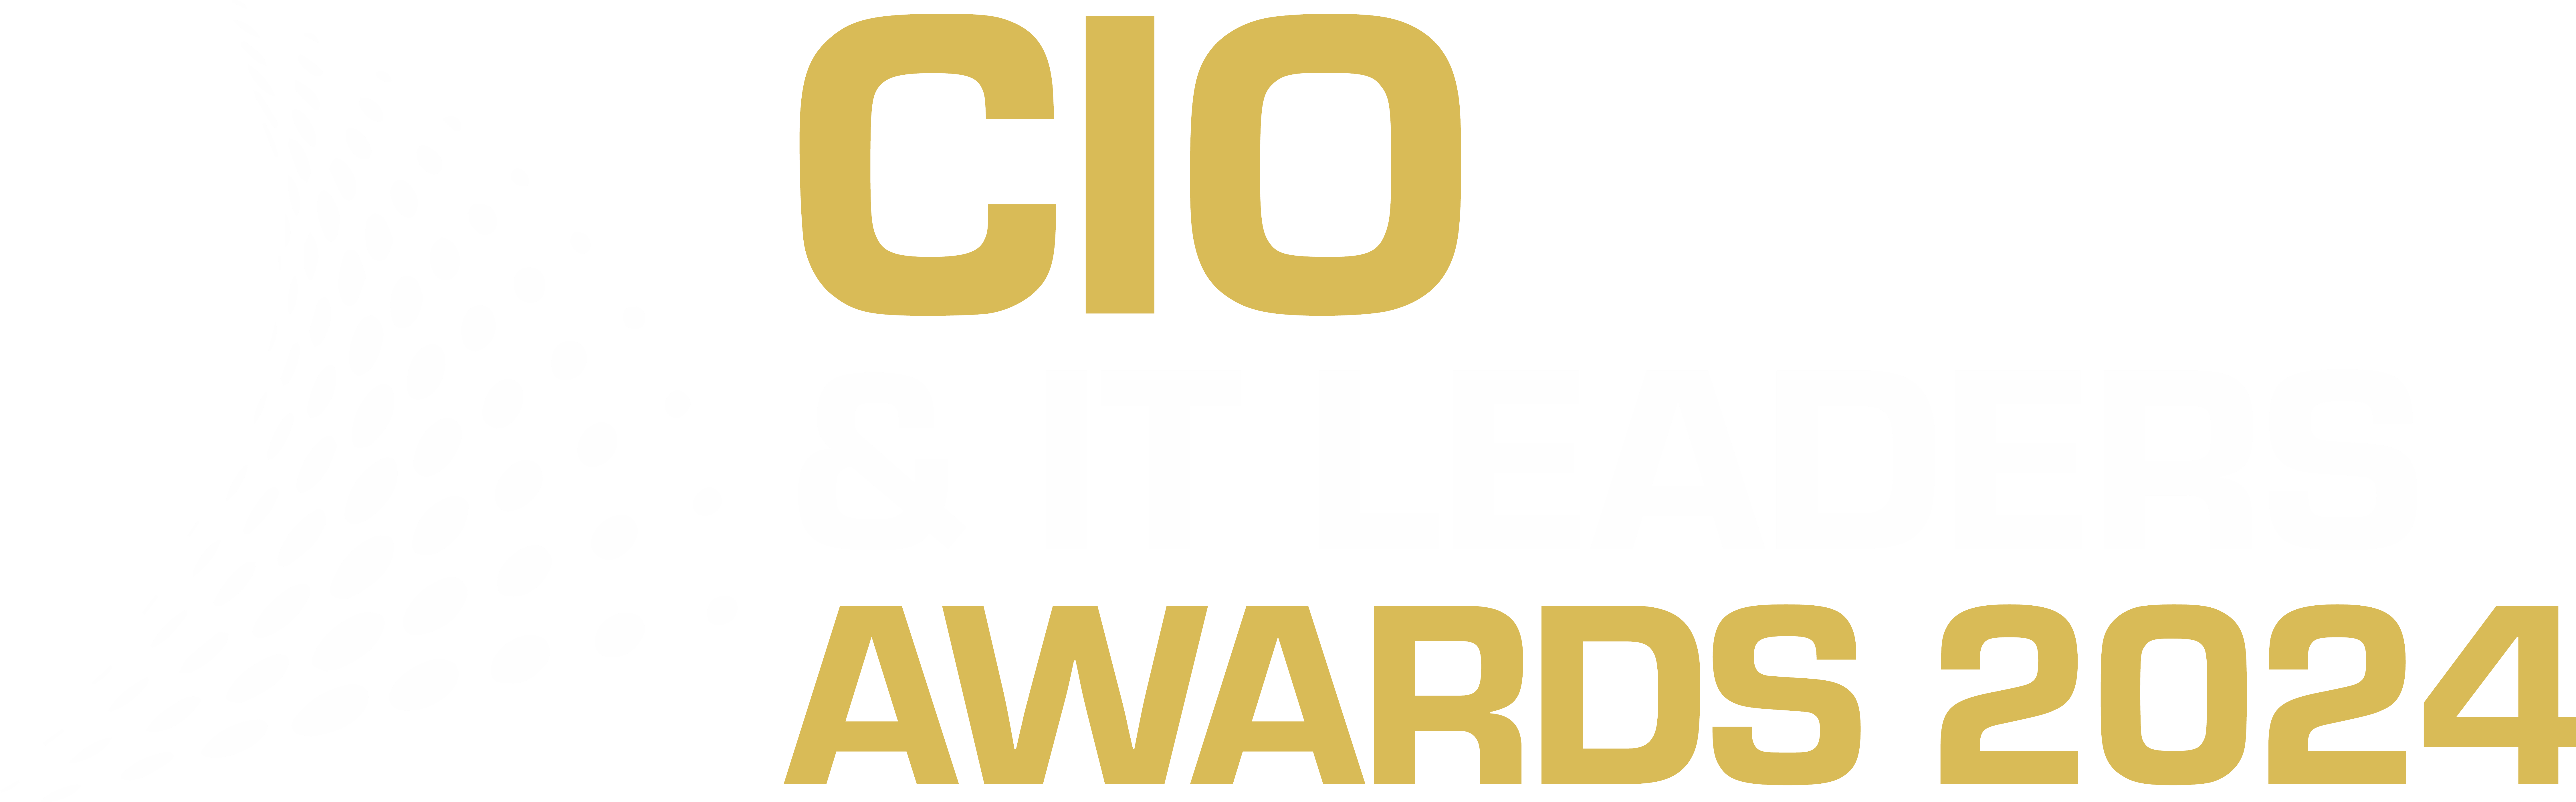 CIO Awards 2024